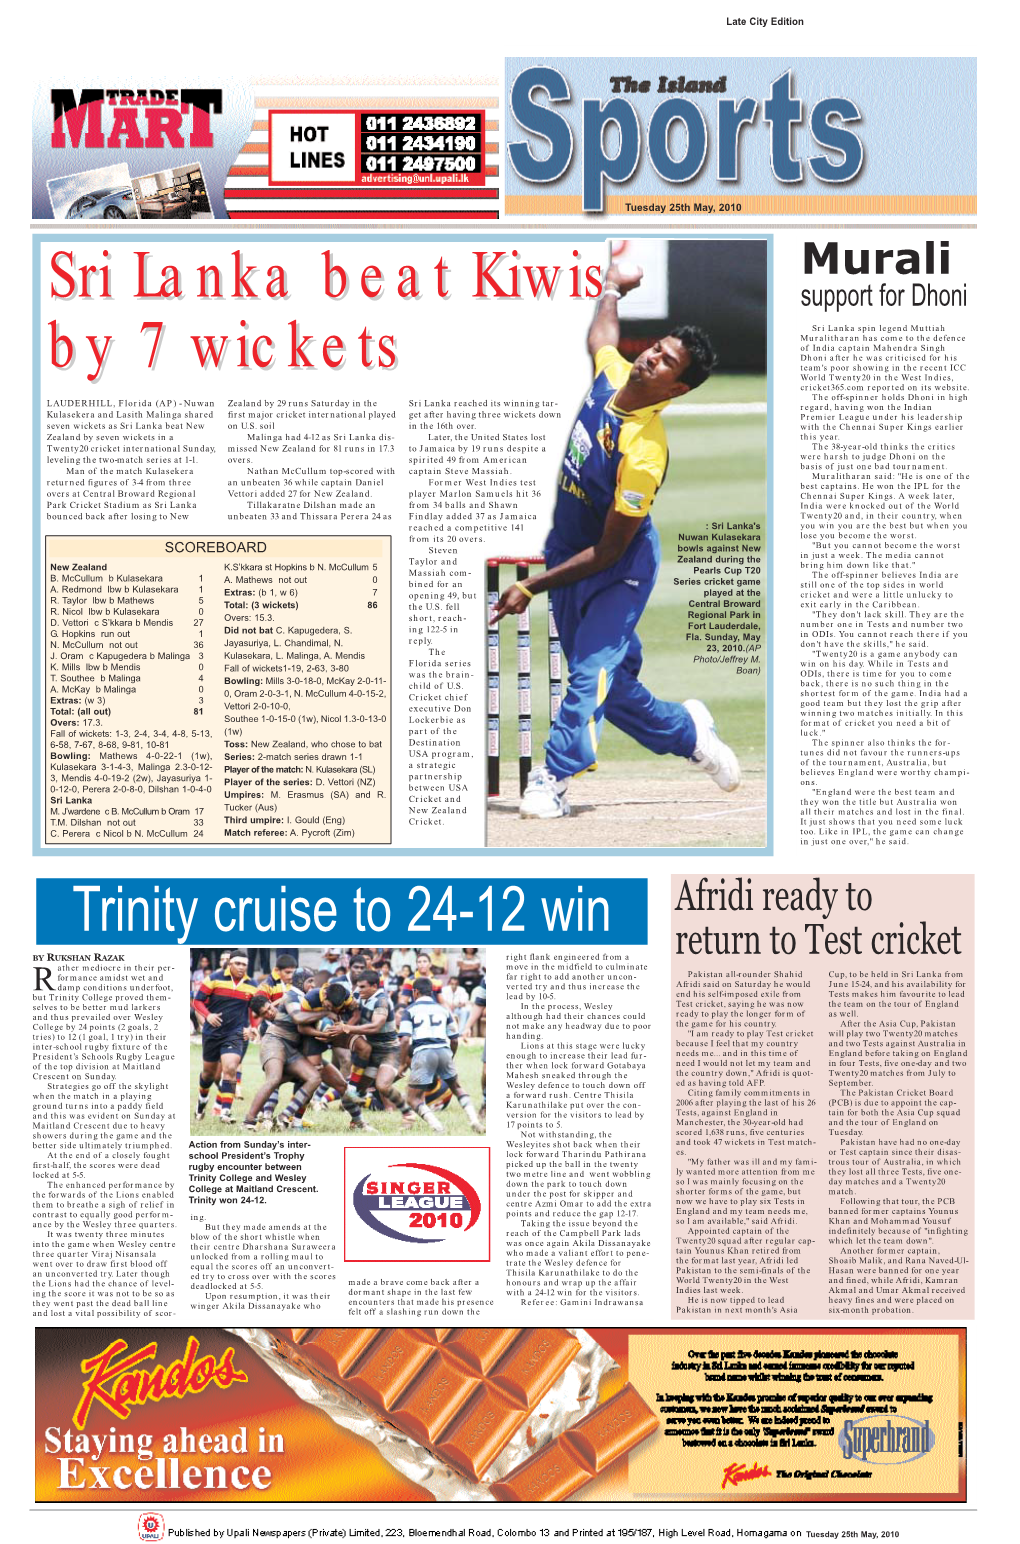 Sri Lanka Beat Kiwis by 7 Wickets